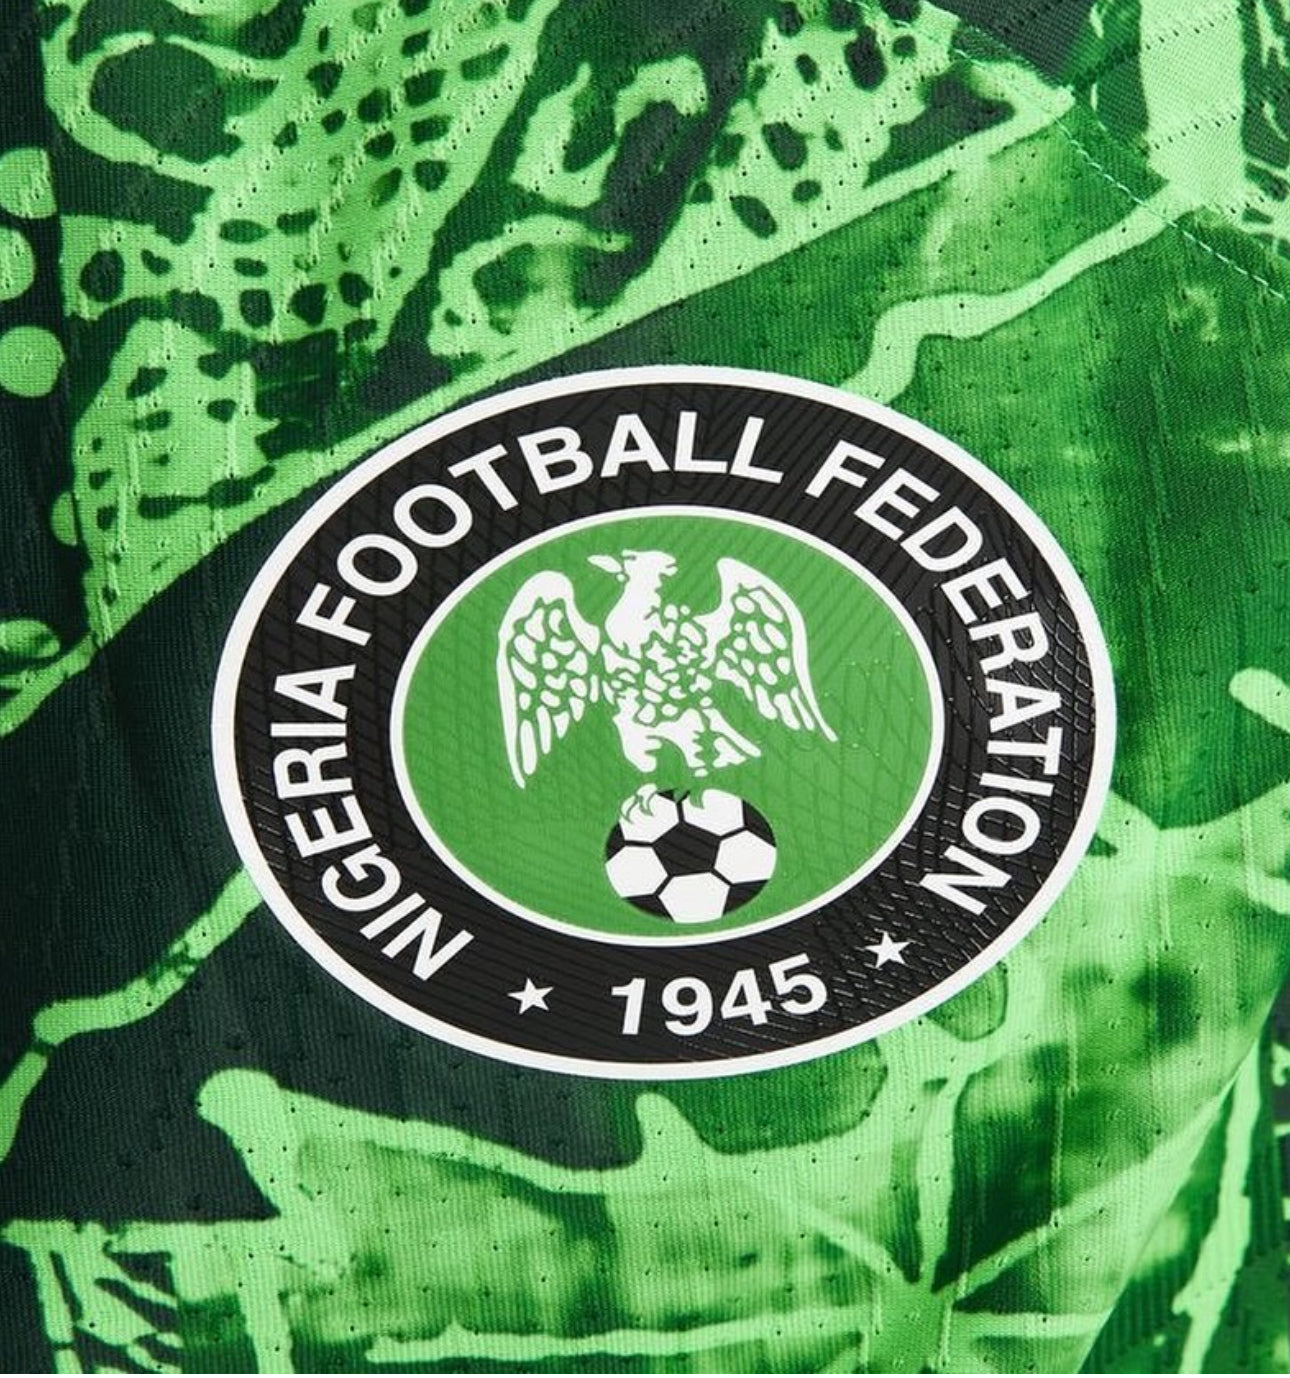 Nigeria 2022/2023 Home Soccer Jersey